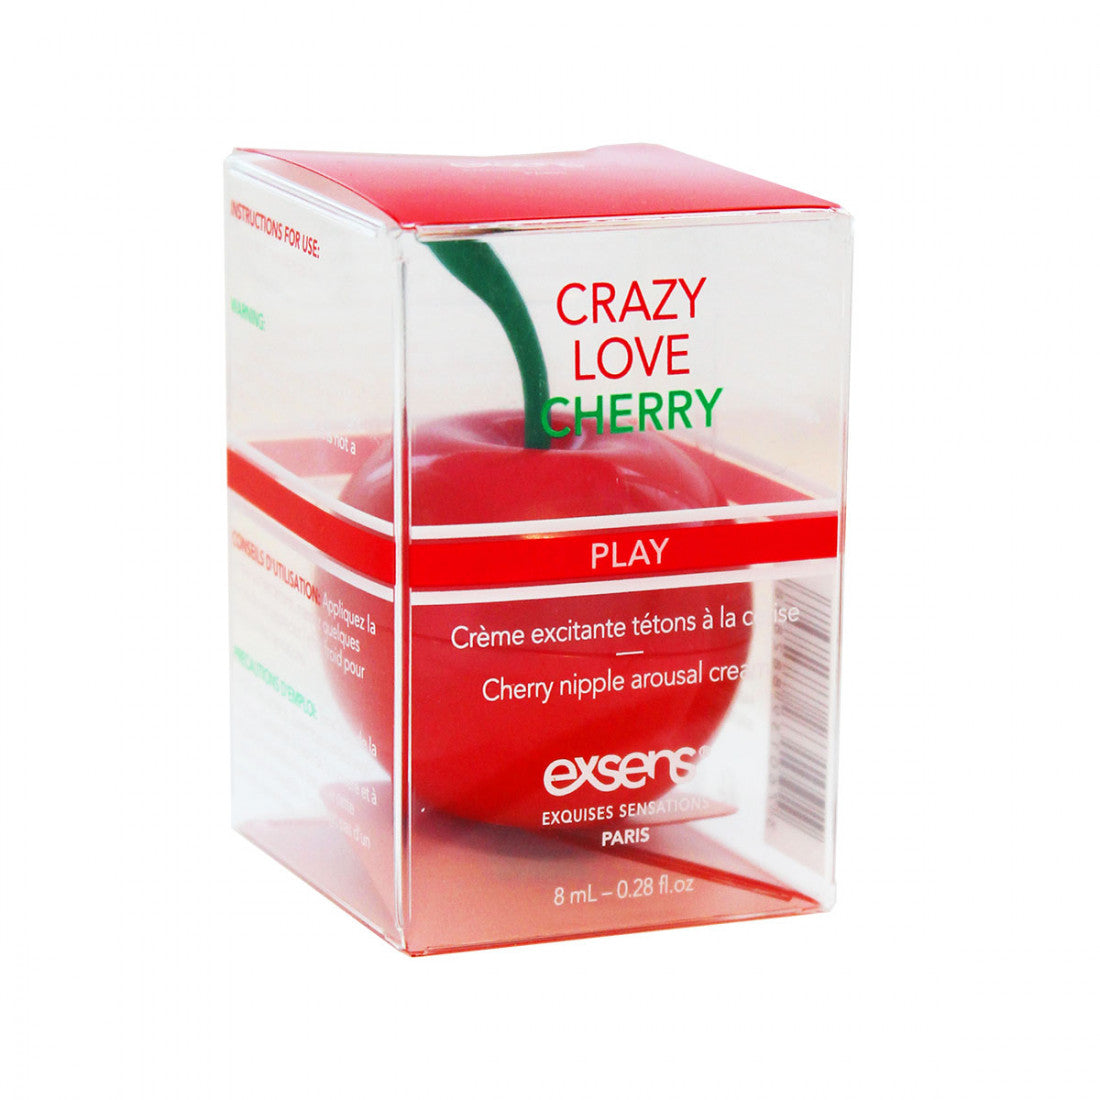 Crazy Love Cherry Nipple Arousal Creme